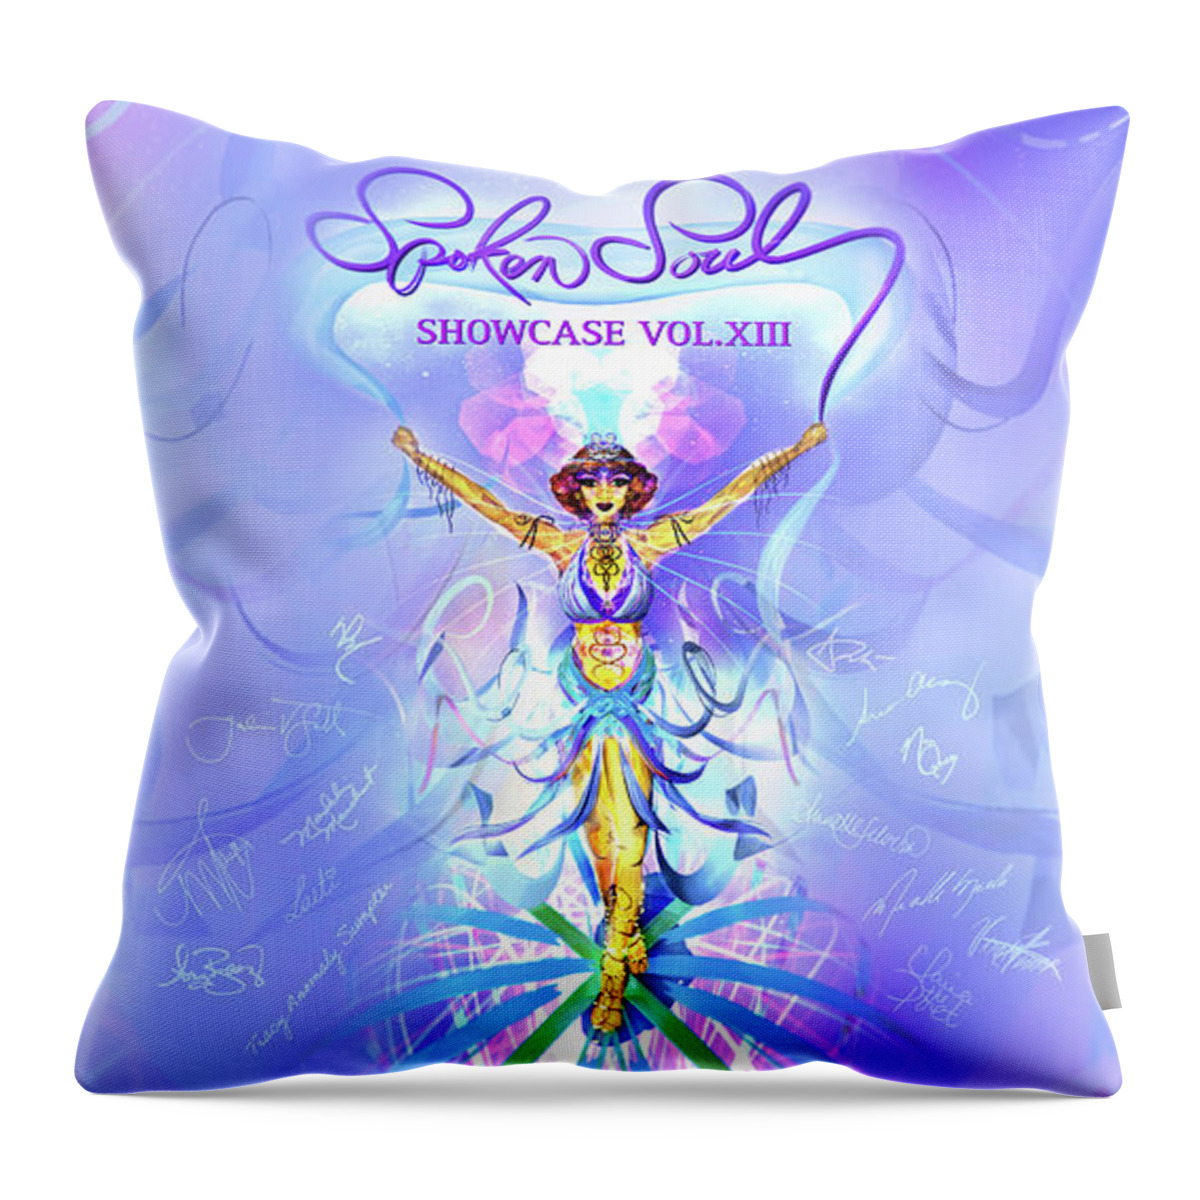 Goddess Throw Pillow featuring the digital art Spoken Soul Signed Goddess, Aurora, AR by Alissa Christine - LUVRworldwide